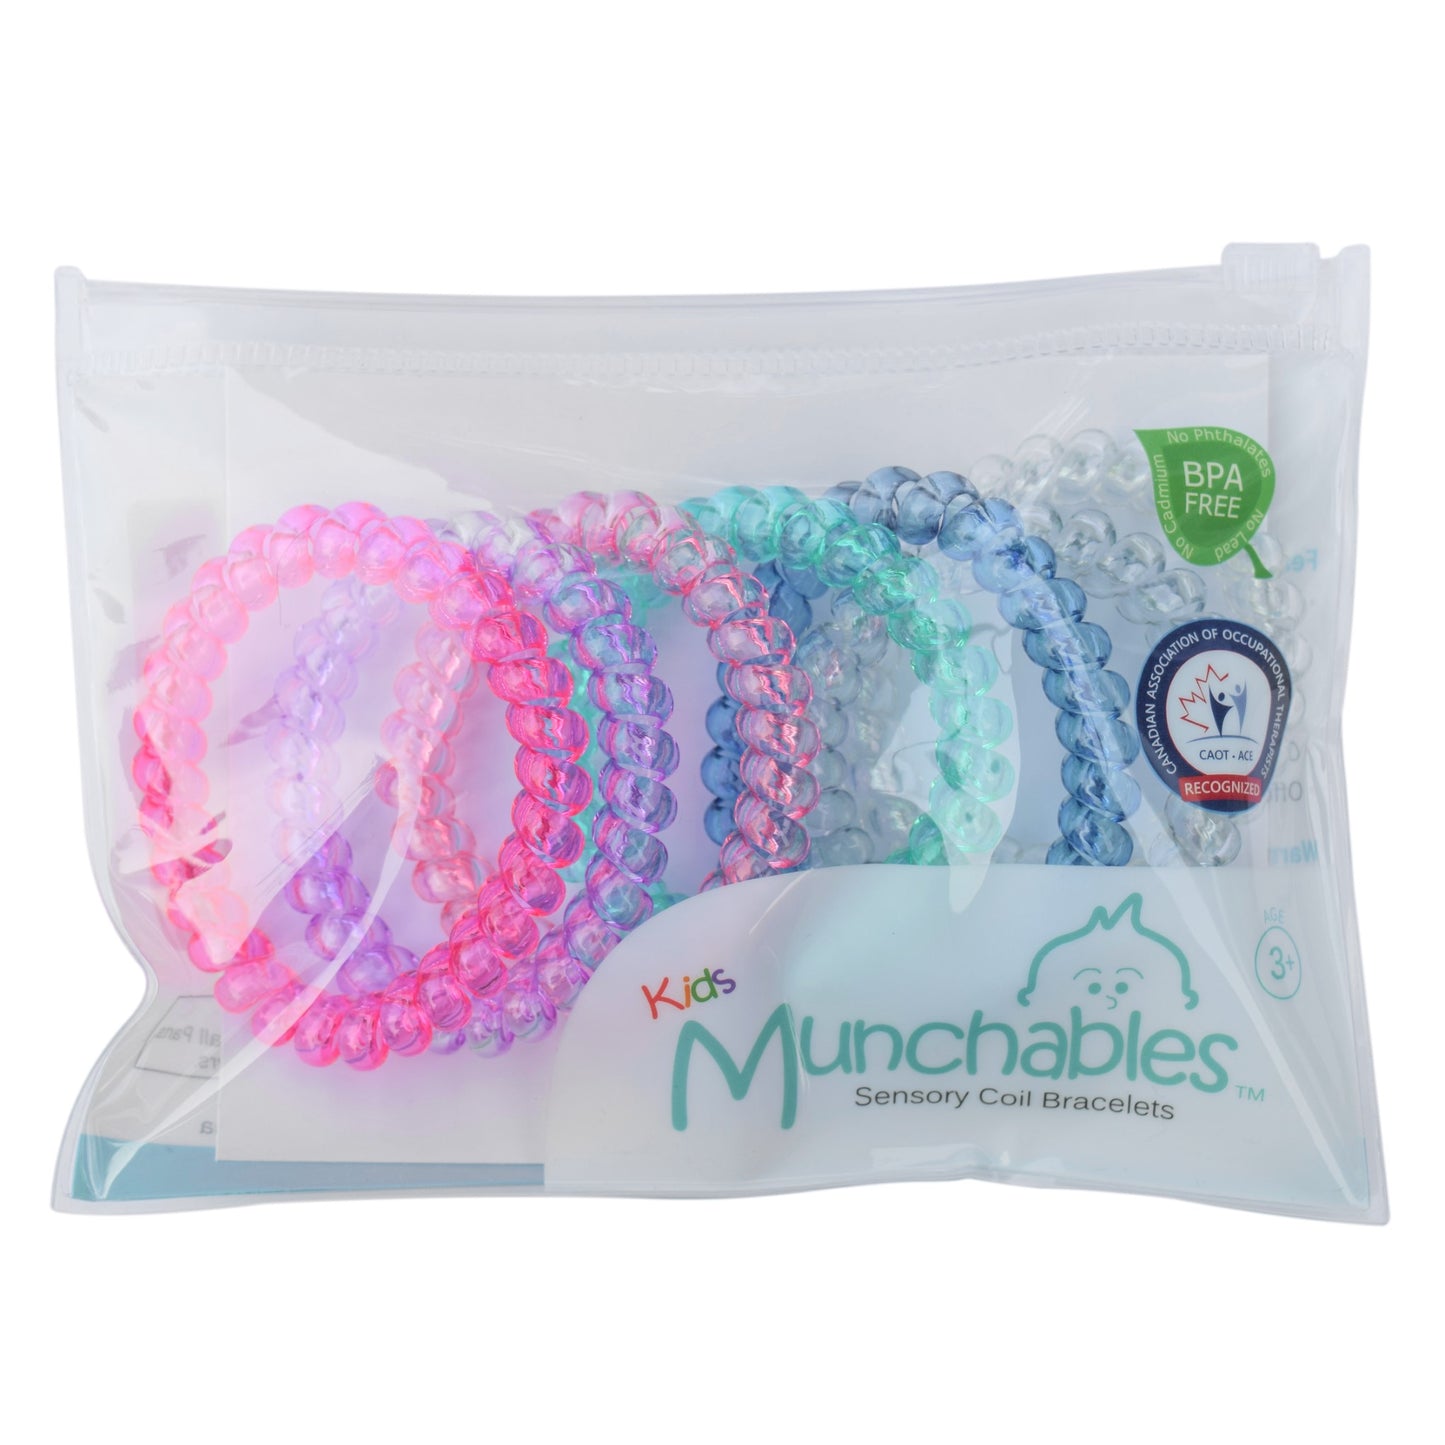 Munchables coil fidget bracelets in package.